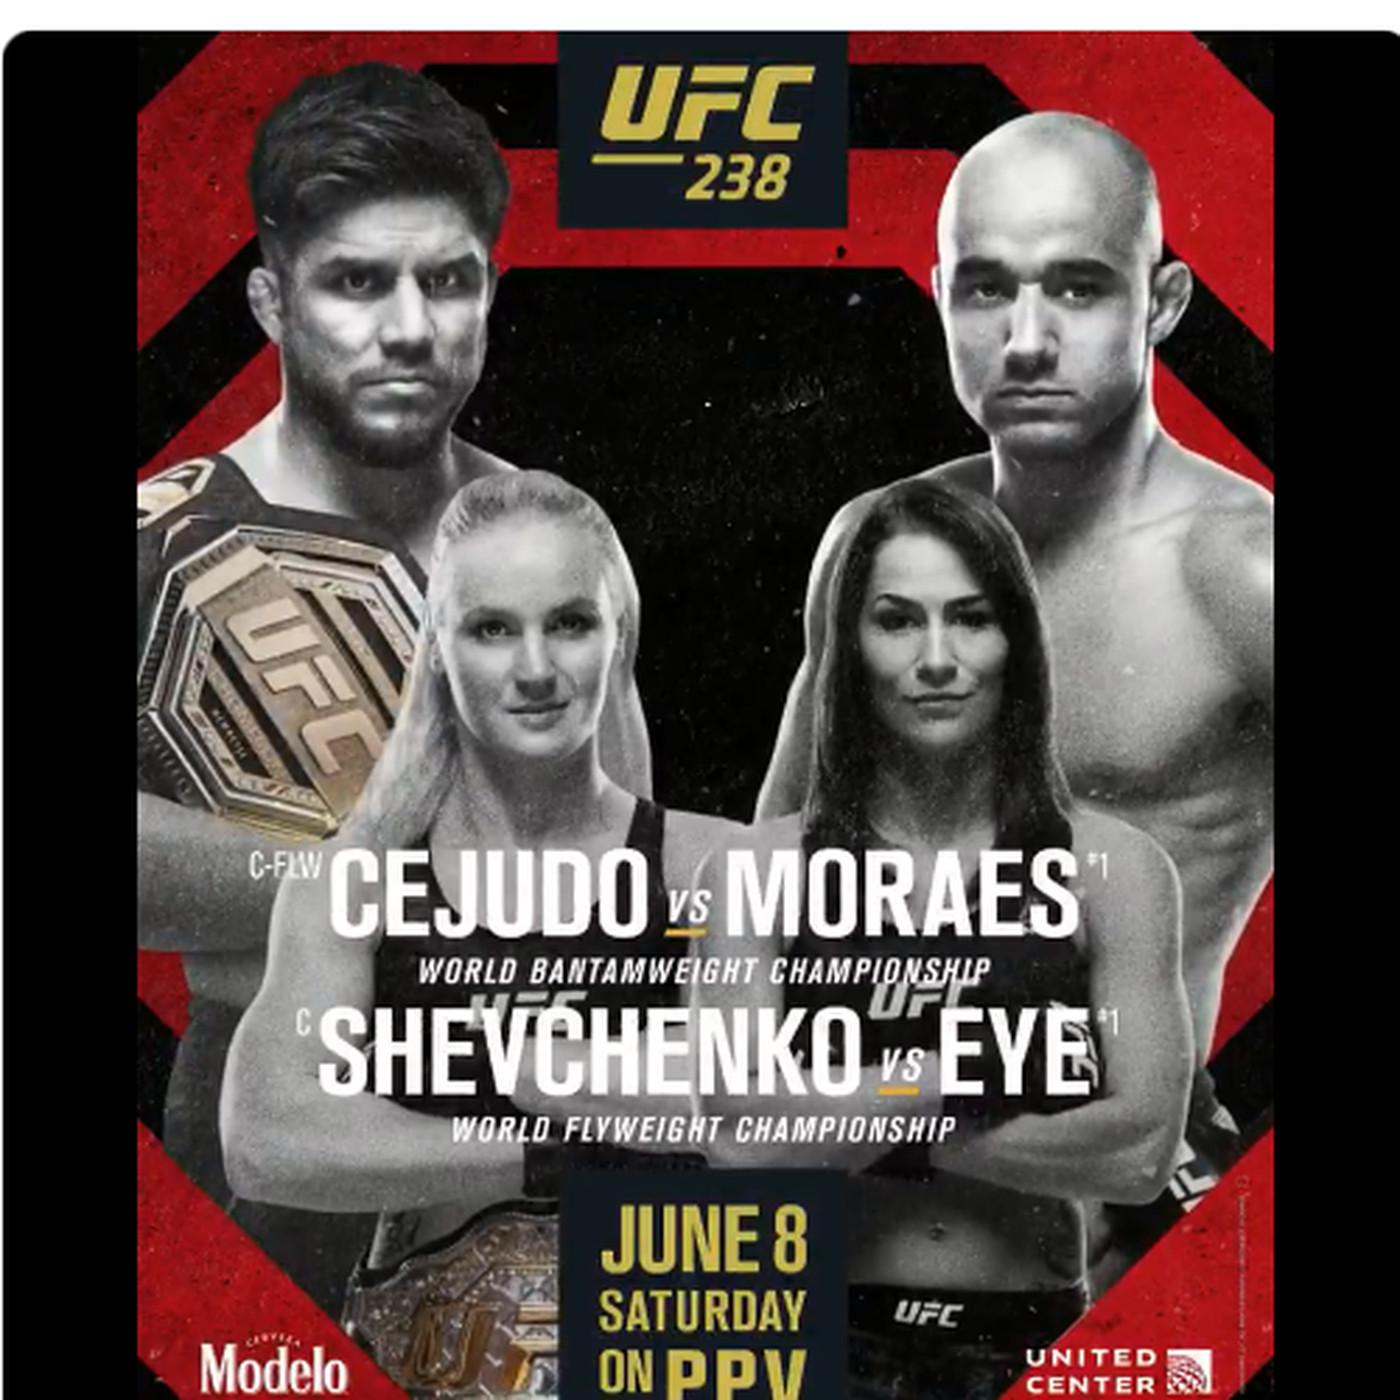 Pic: Official UFC 238 poster drops for 'Cejudo vs Moraes' on June 8